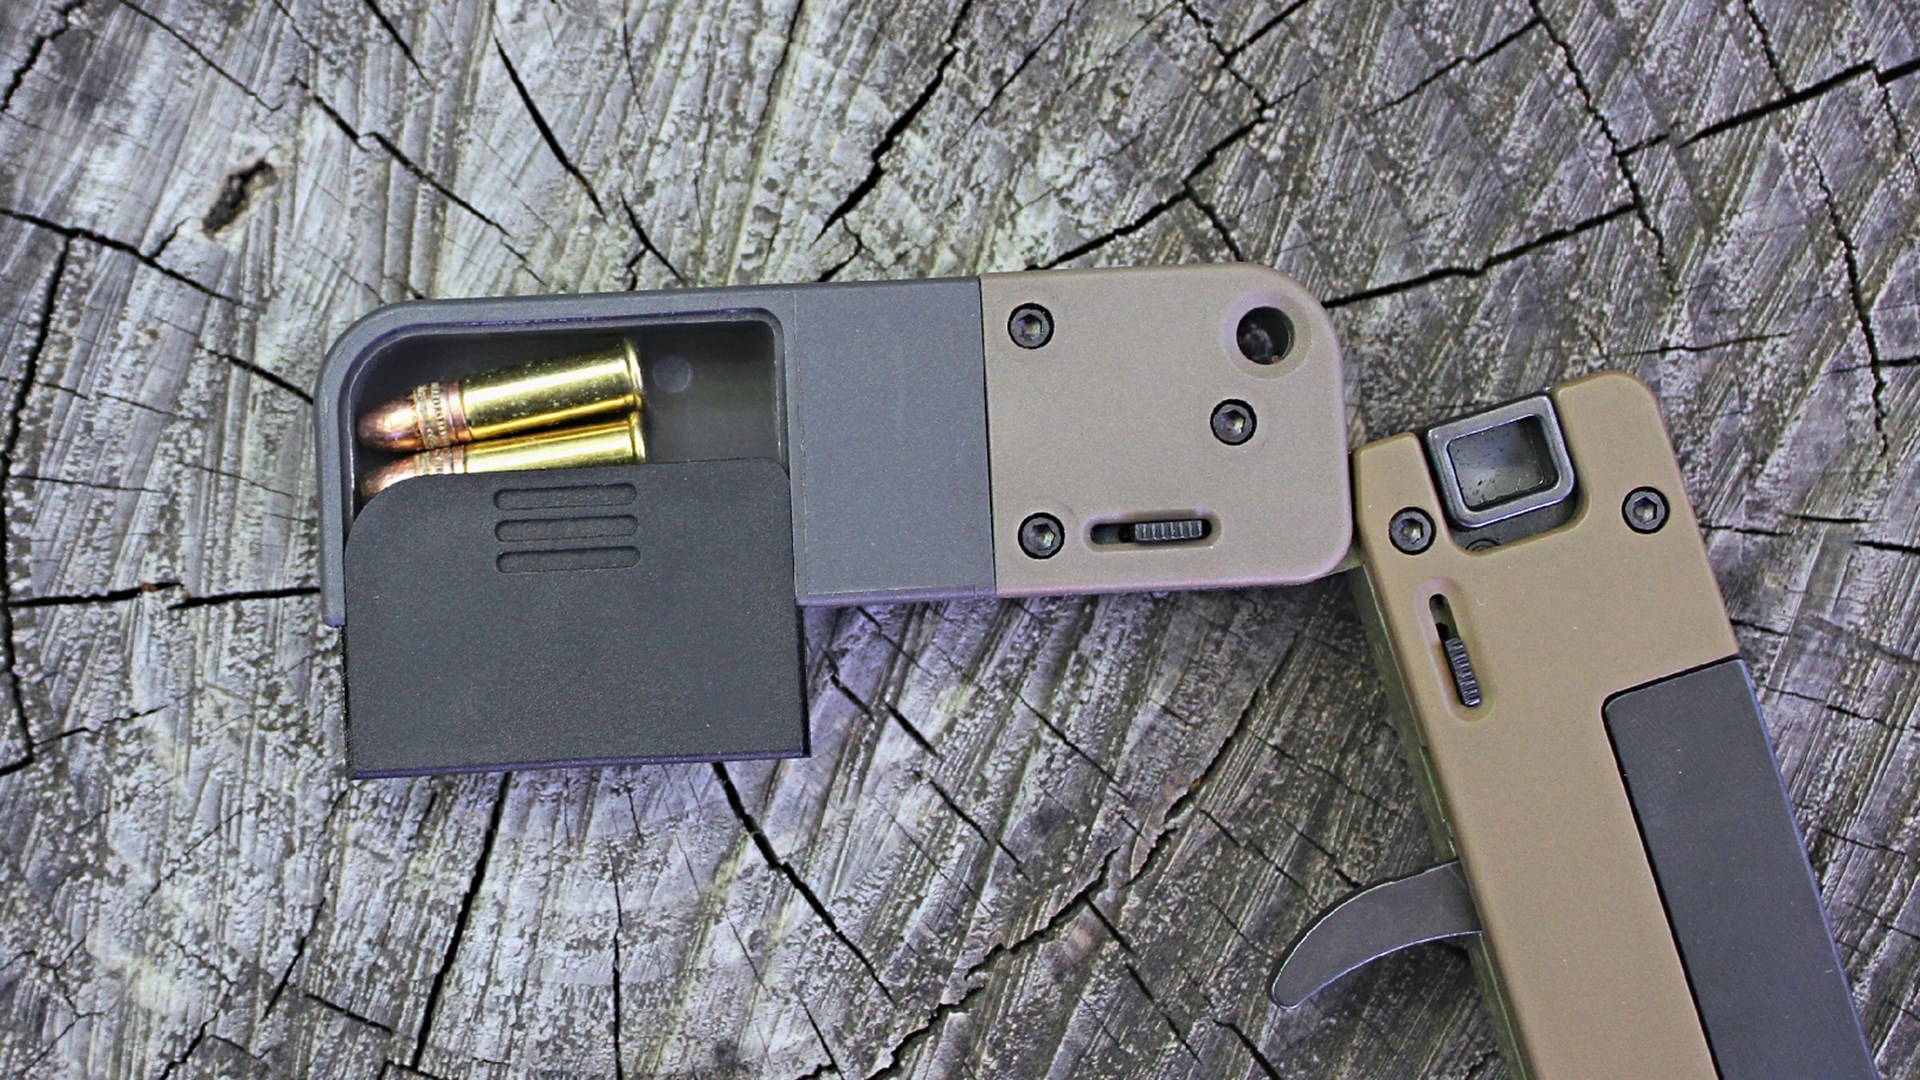 LifeCard single-shot .22 LR pistol storage compartment detail closeup ammunition rounds gold brass cartridge rimfire wood background log